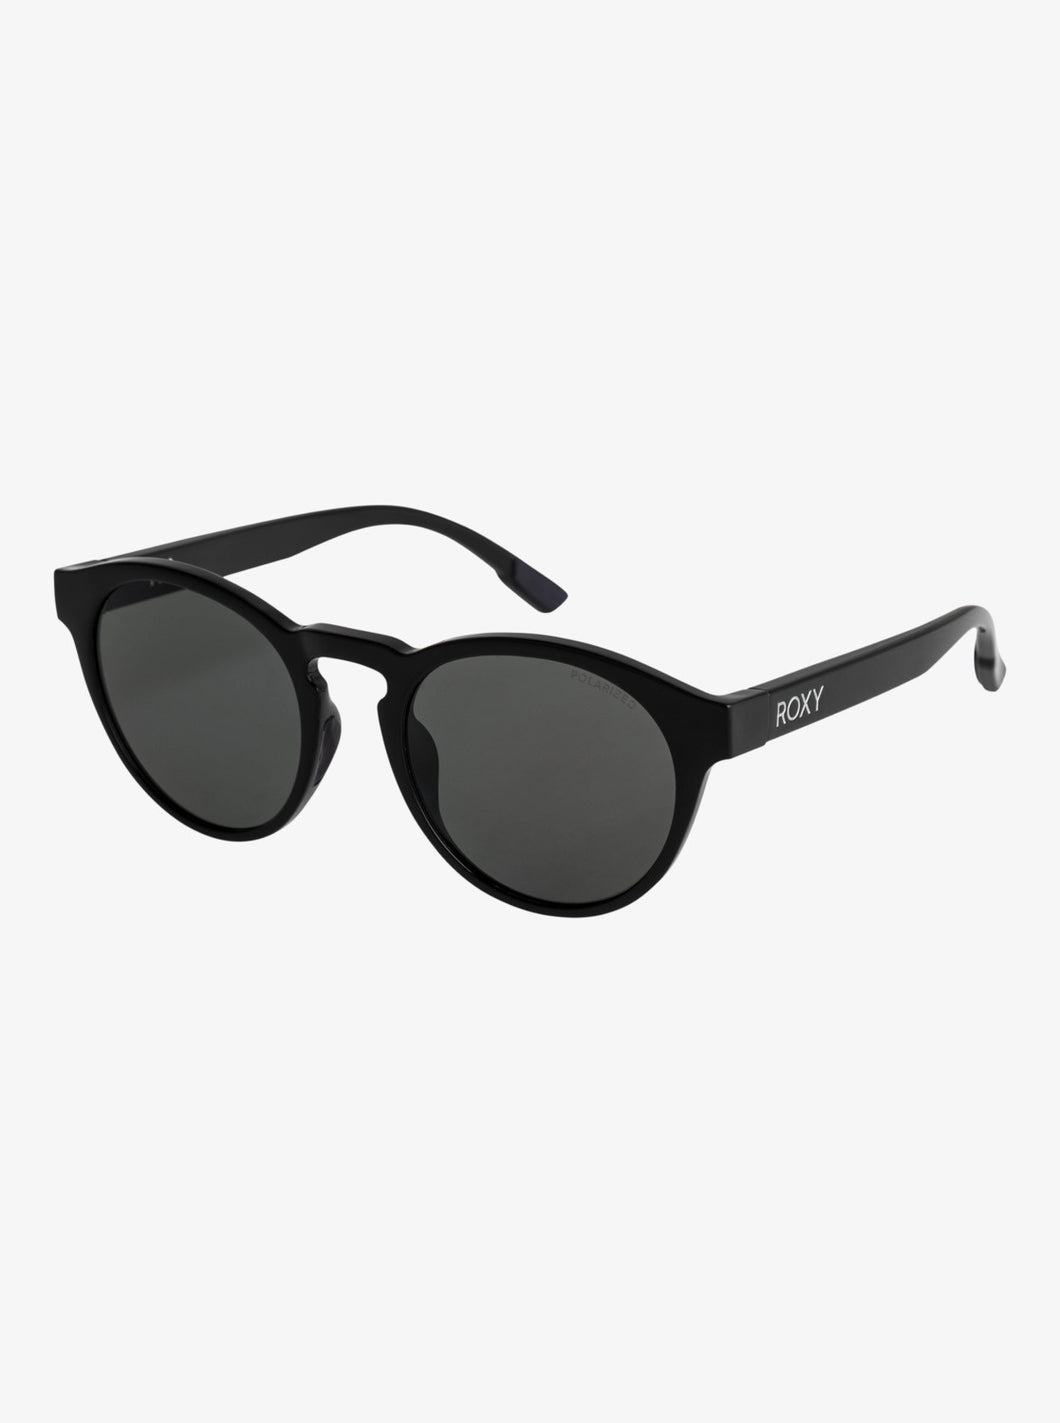 Roxy IVI Polarized Sunglasses